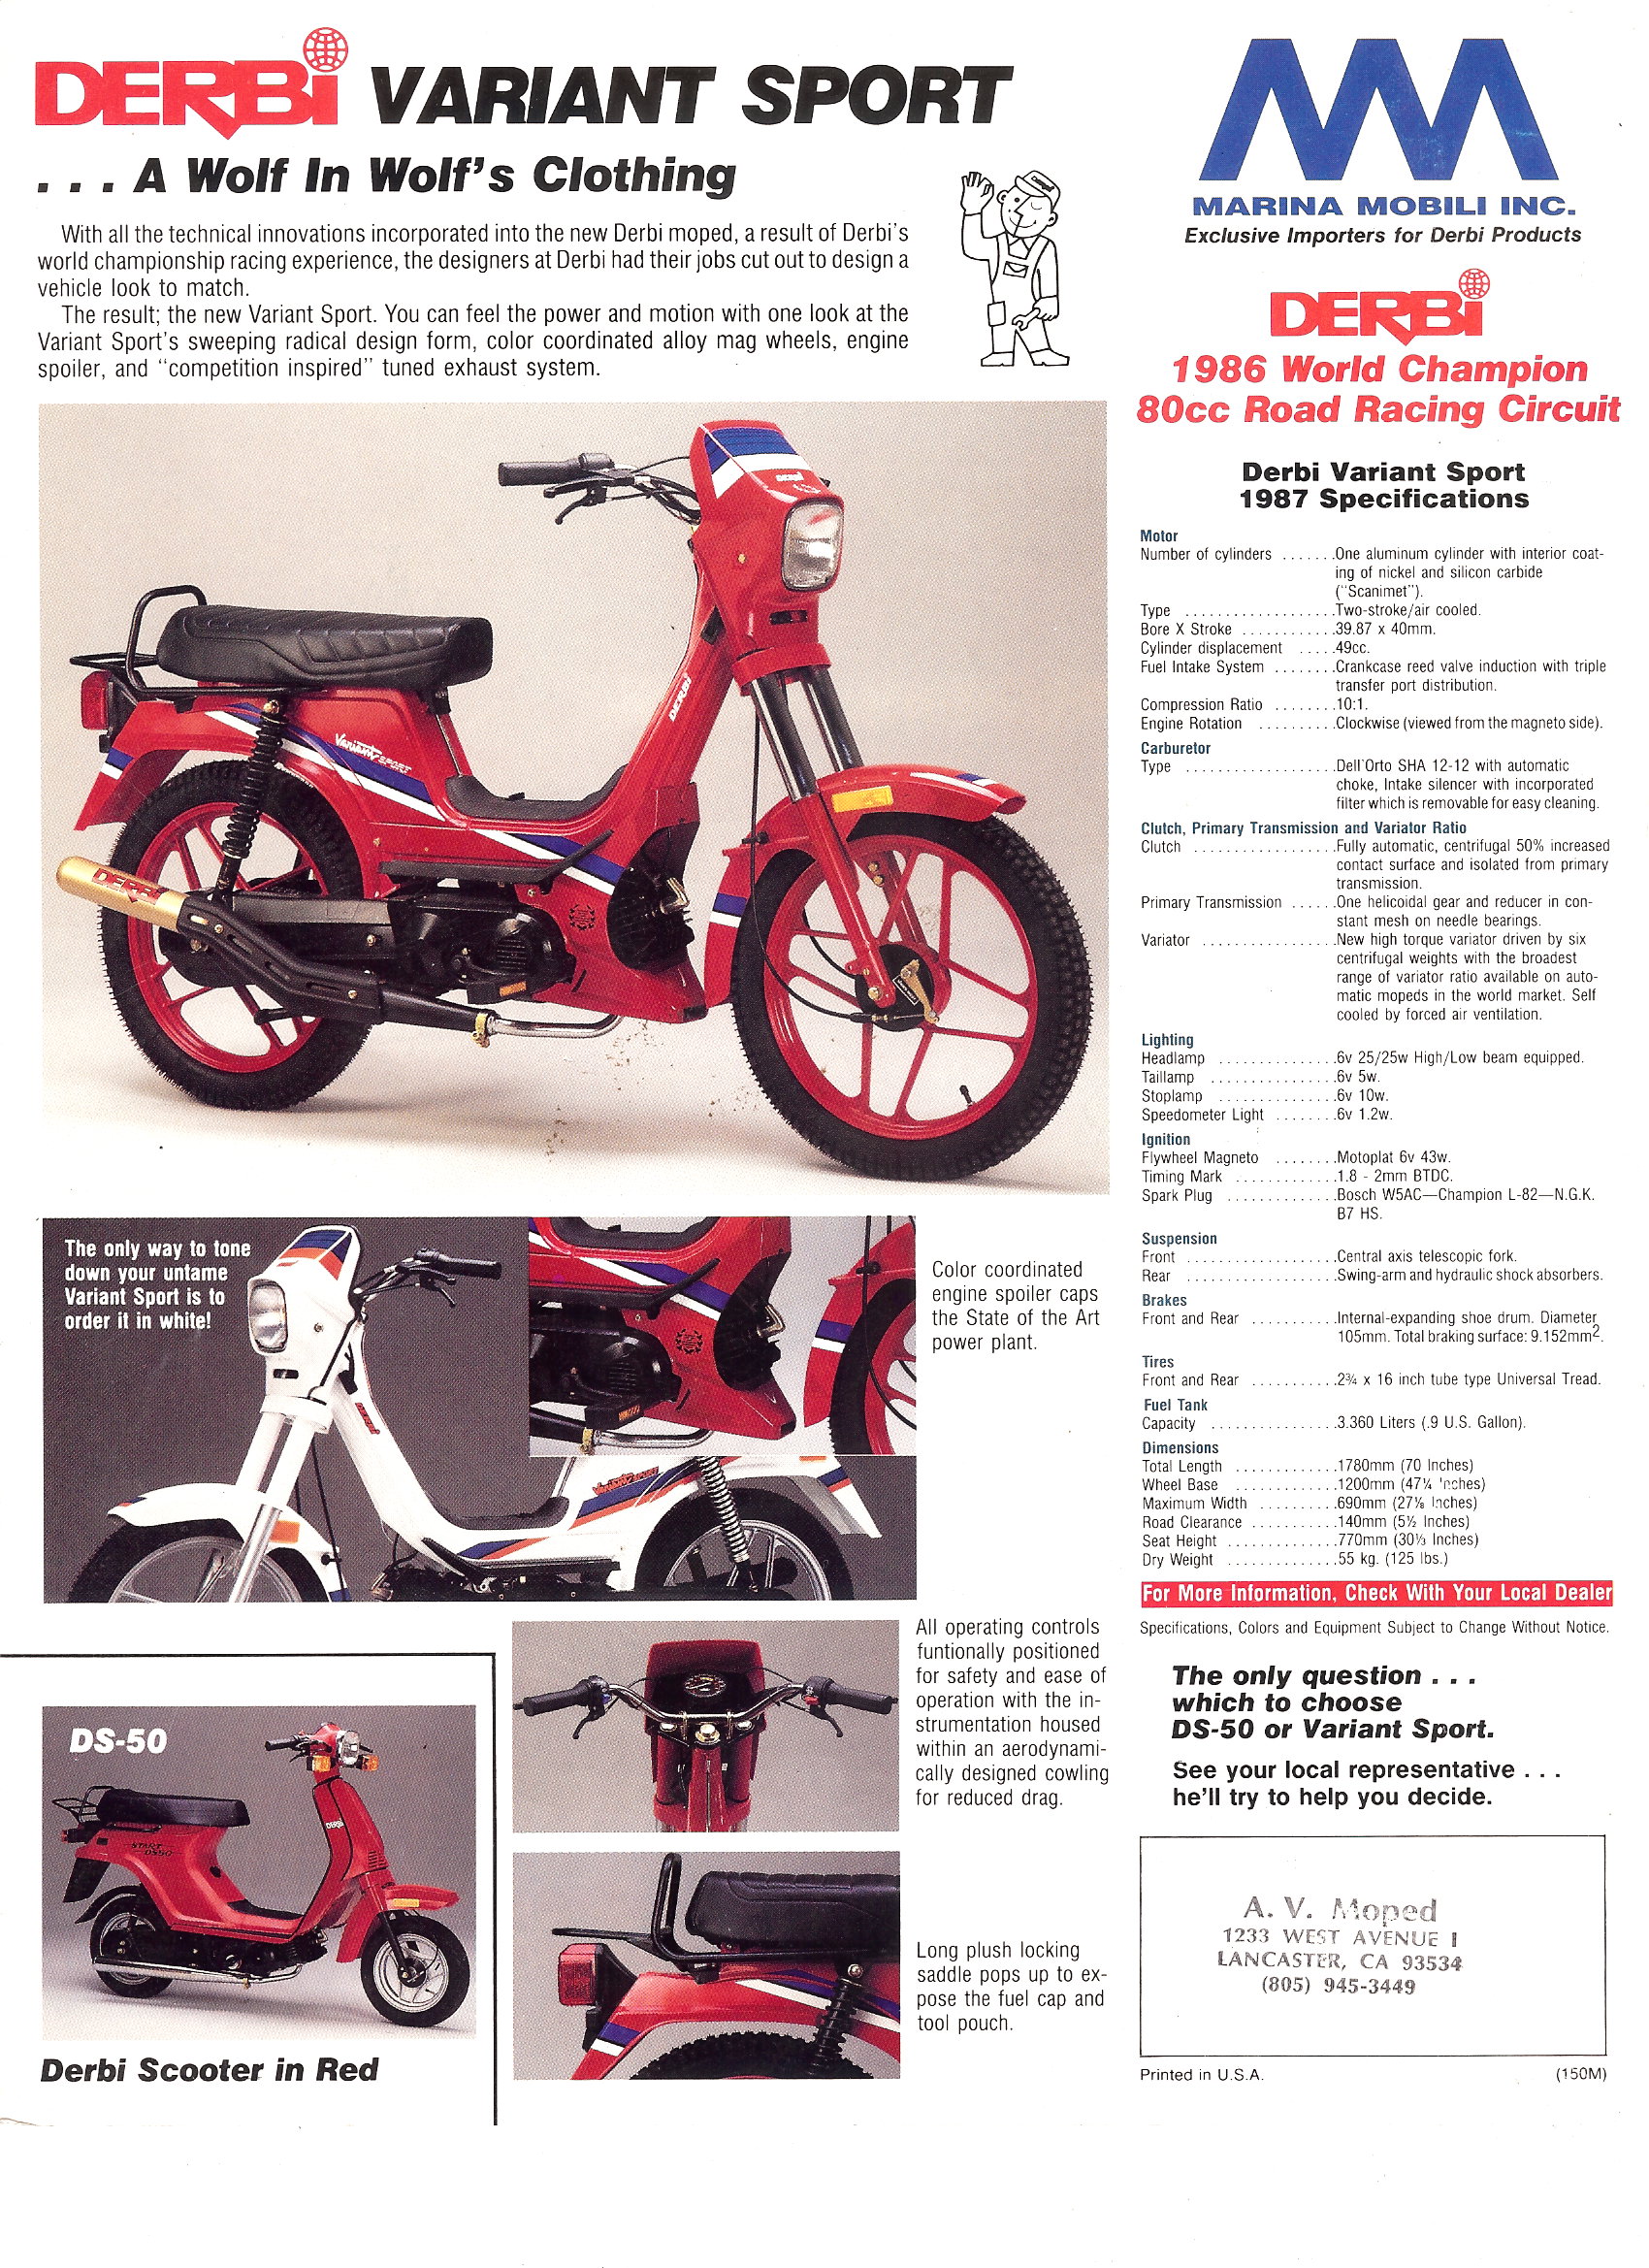 Eds Moped Shop - For Sale: Derbi Variant TT Tons of new